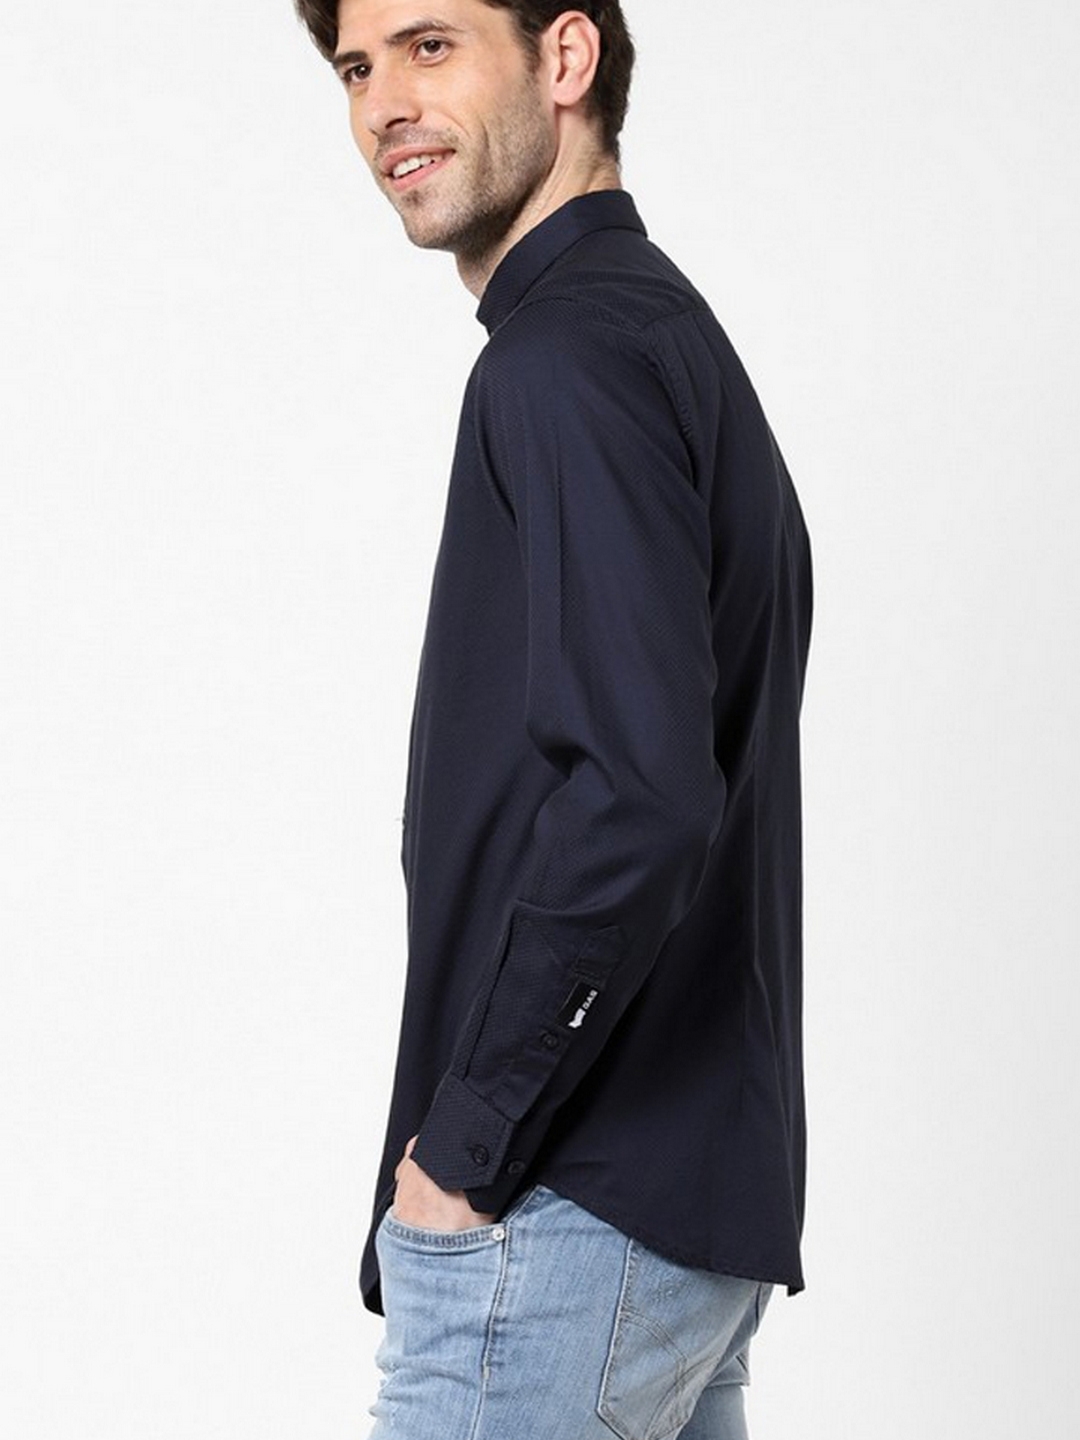 Slim Fit Shirt with Cutaway Collar